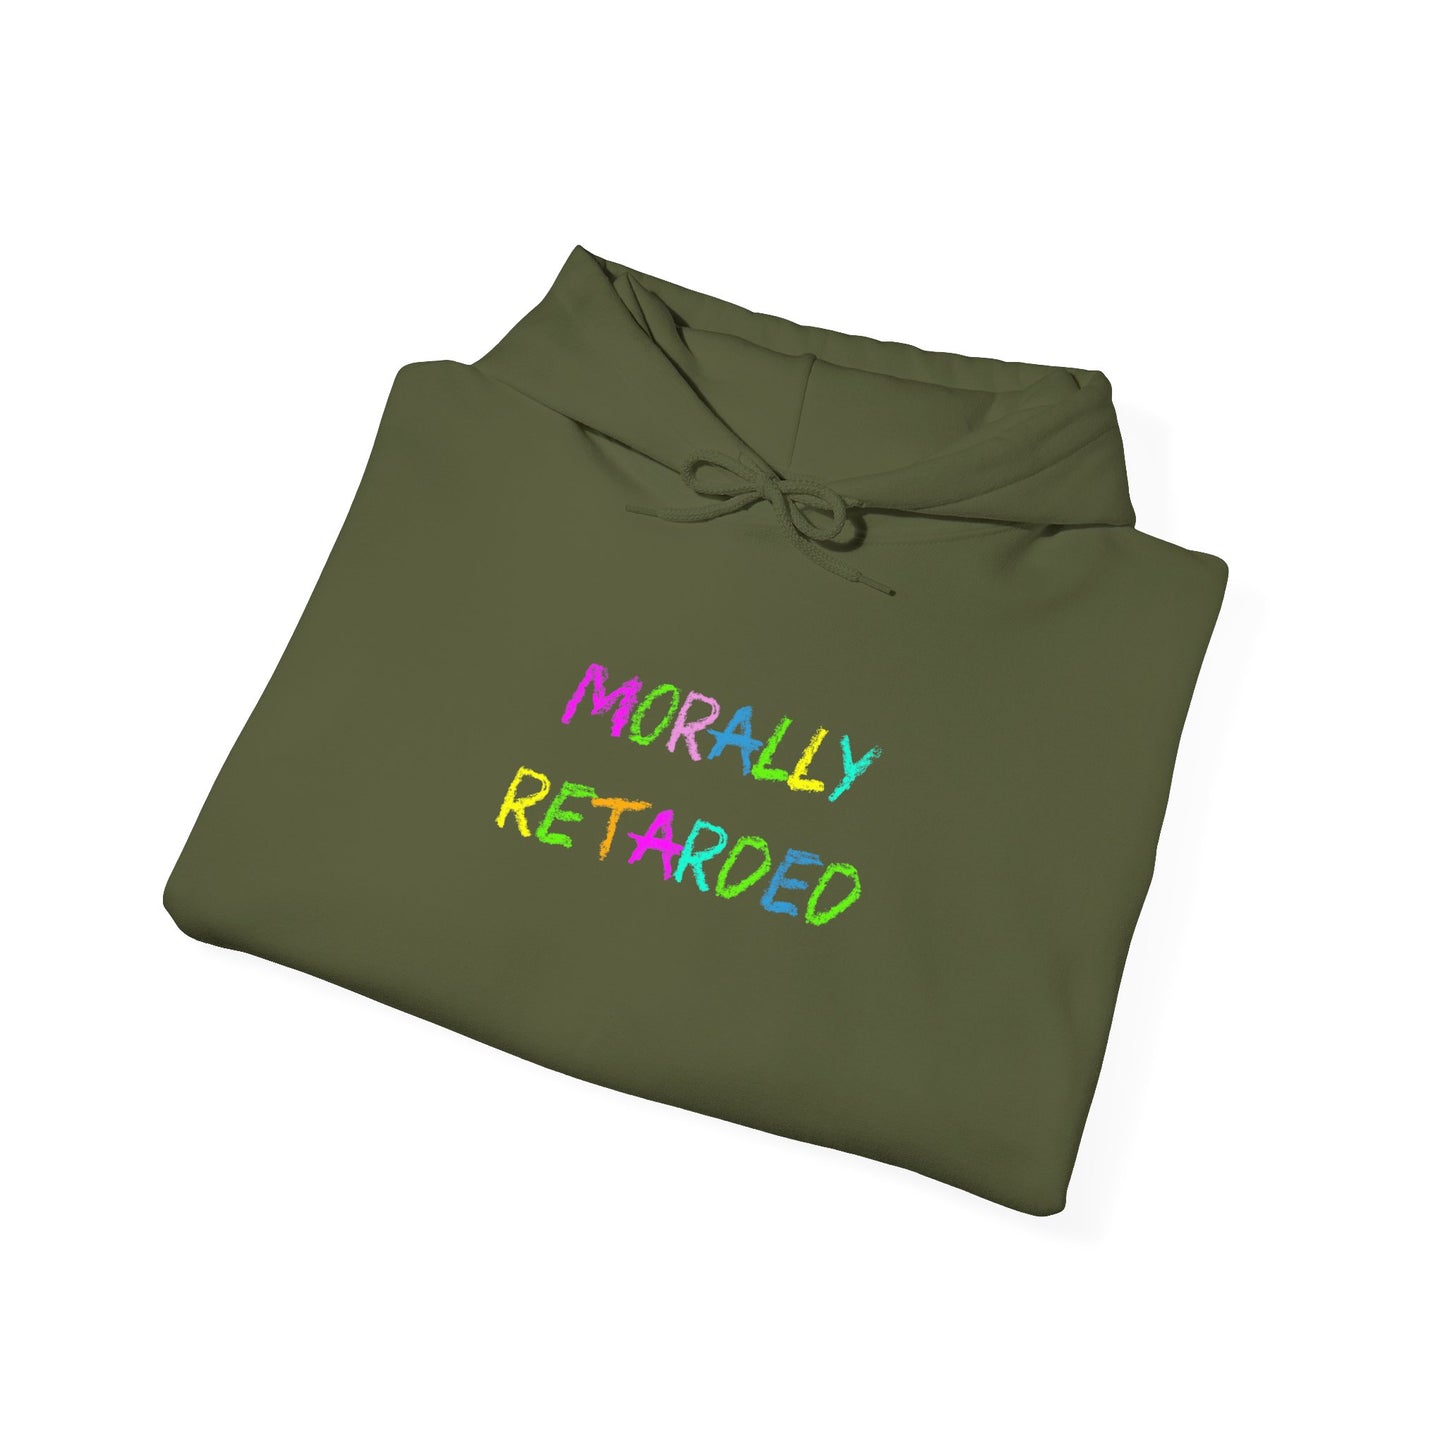 Morally Retarded - Hooded Sweatshirt